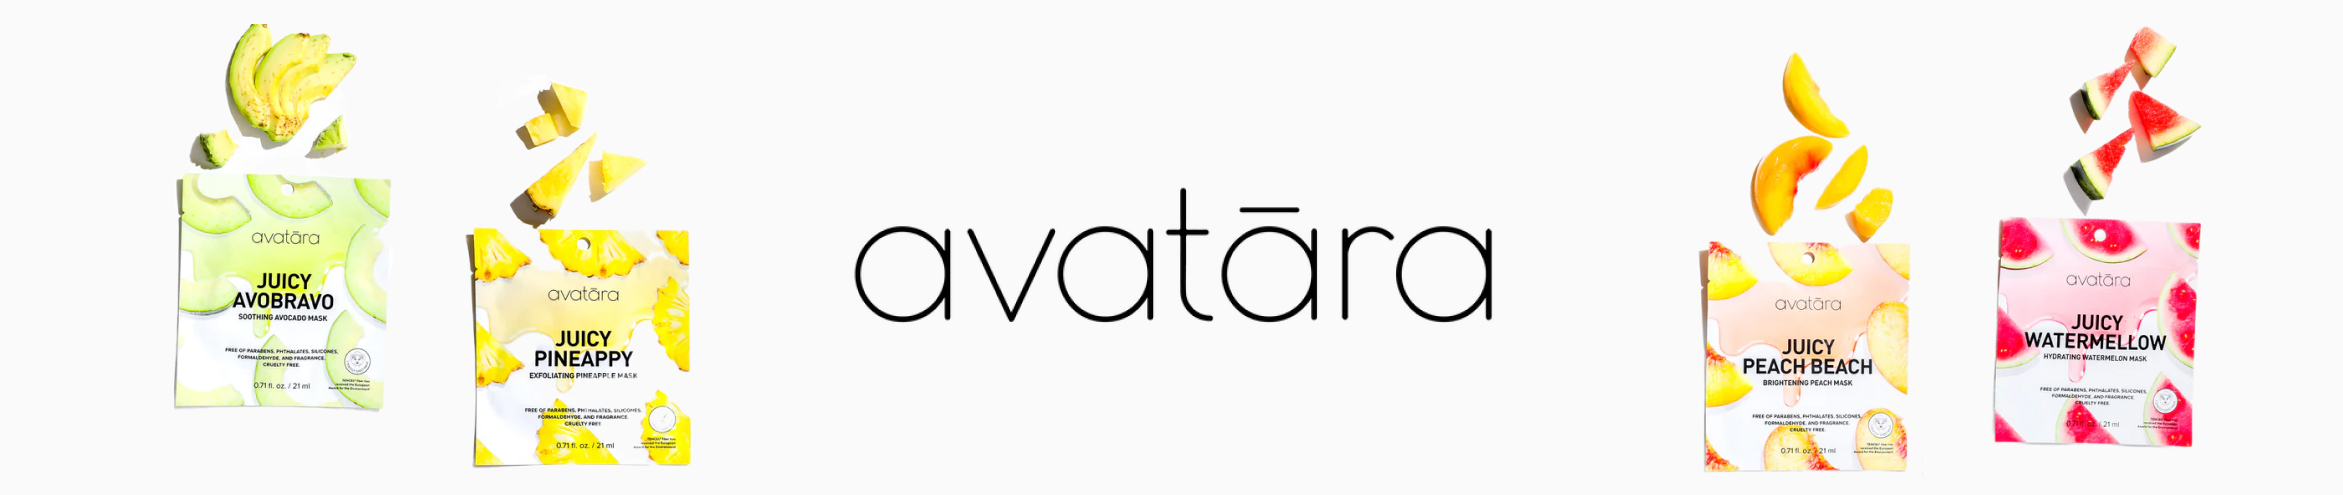 Avatara - Skin Care